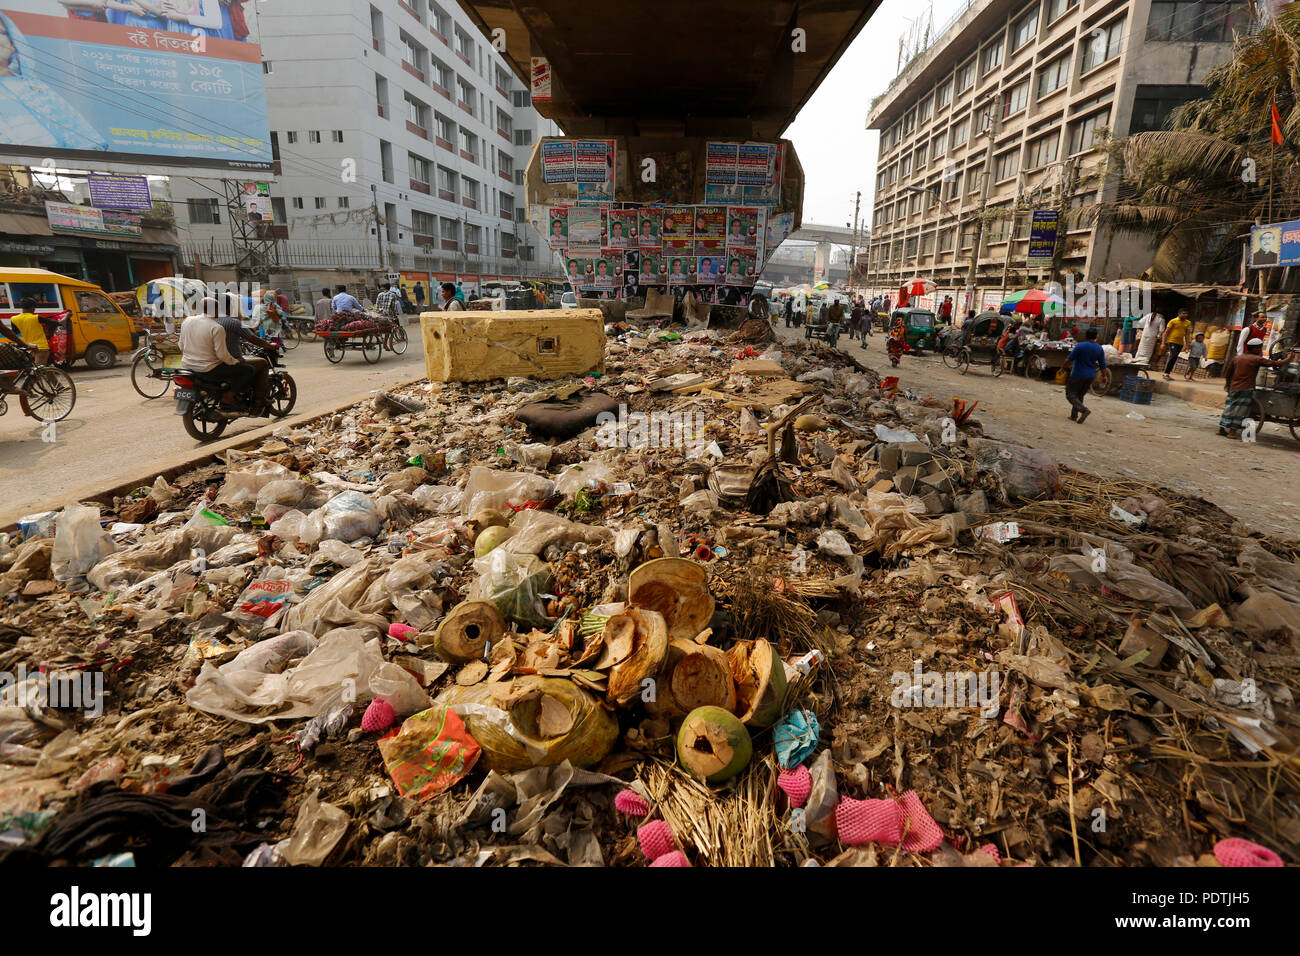 garbage-littered-on-the-streets-is-the-common-scenario-in-dhaka-the-capital-city-of-bangladesh-dhaka-bangladesh-PDTJH5.jpg